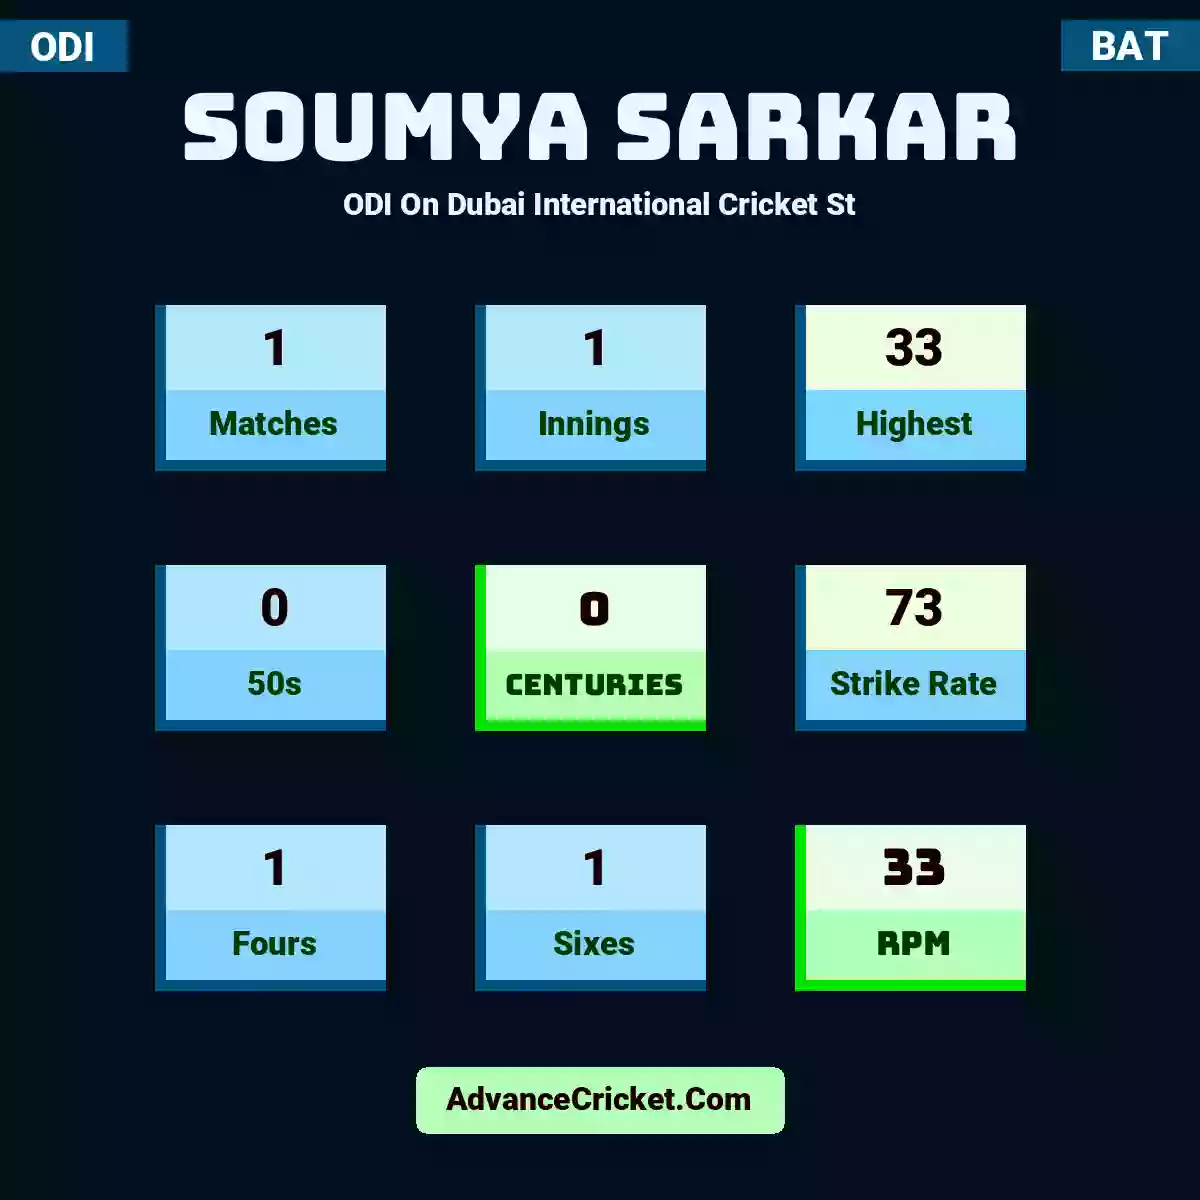 Soumya Sarkar ODI  On Dubai International Cricket St, Soumya Sarkar played 1 matches, scored 33 runs as highest, 0 half-centuries, and 0 centuries, with a strike rate of 73. S.Sarkar hit 1 fours and 1 sixes, with an RPM of 33.